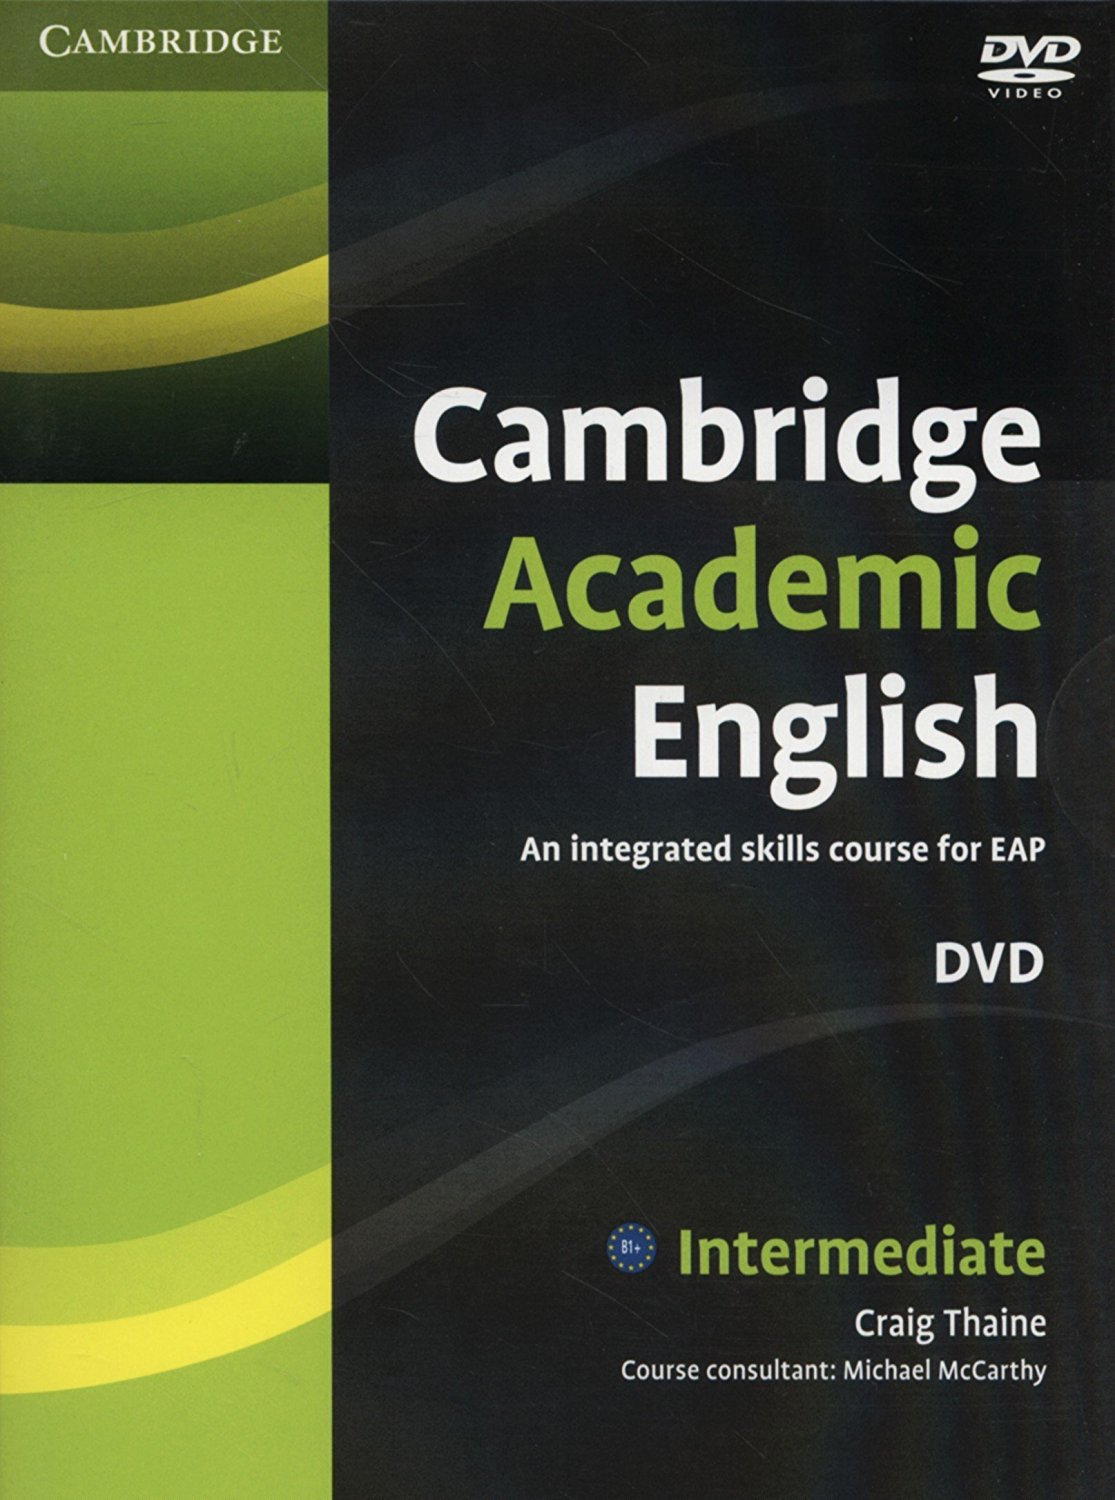 CAMBRIDGE ACADEMIC ENGLISH INTERMEDIATE DVD